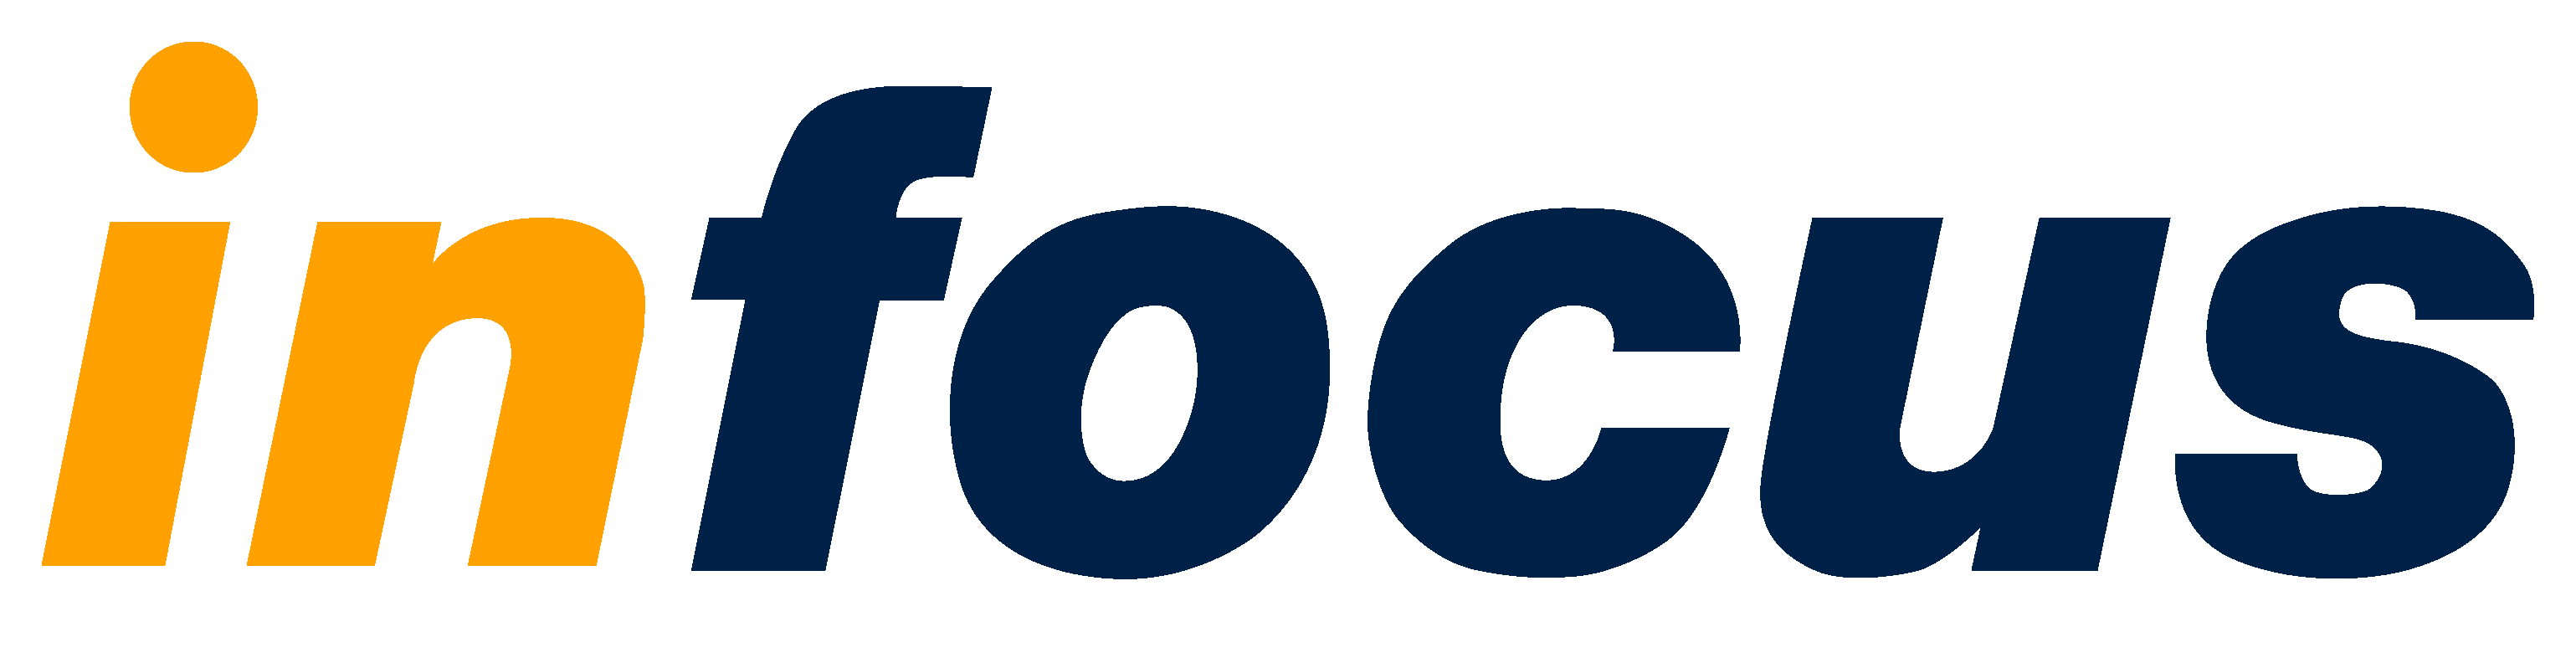 Infocus Logo - logo - Infocus